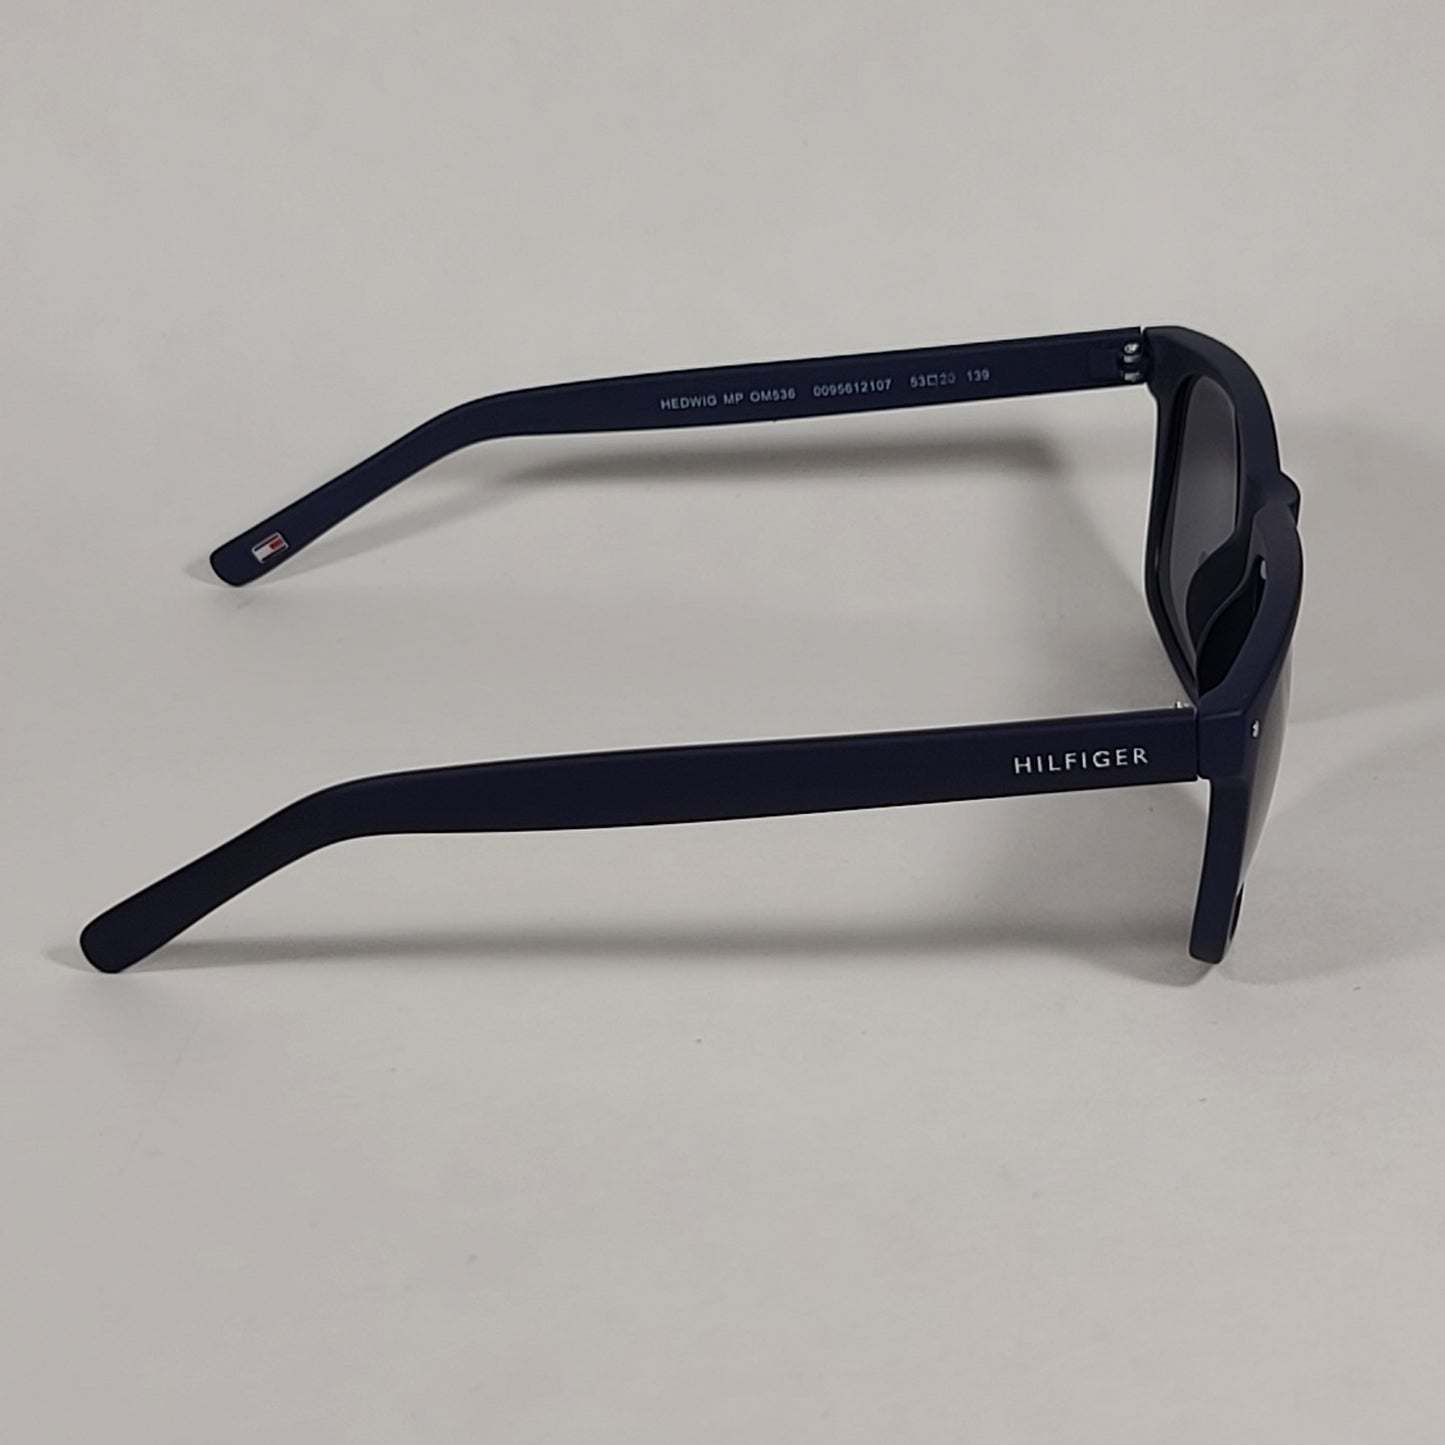 Tommy Hilfiger Hedwig Square Sunglasses Matte Dark Navy Blue Gray Lens HEDWIG MP OM536 - Sunglasses